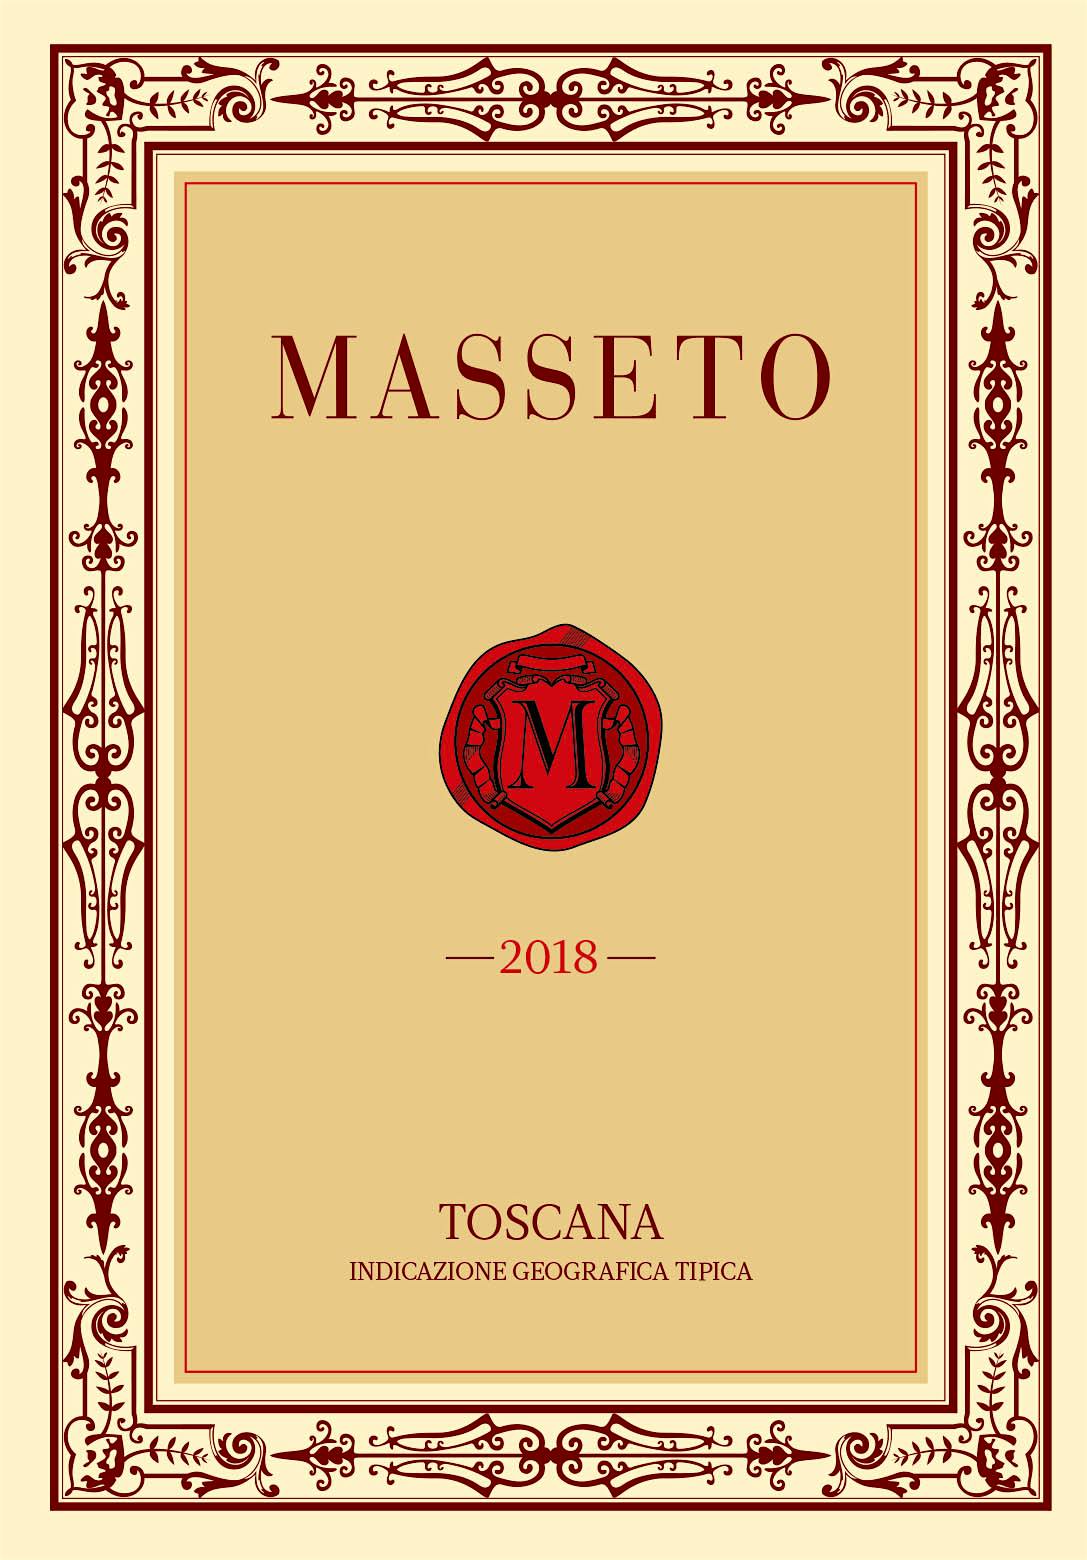 Label for Masseto